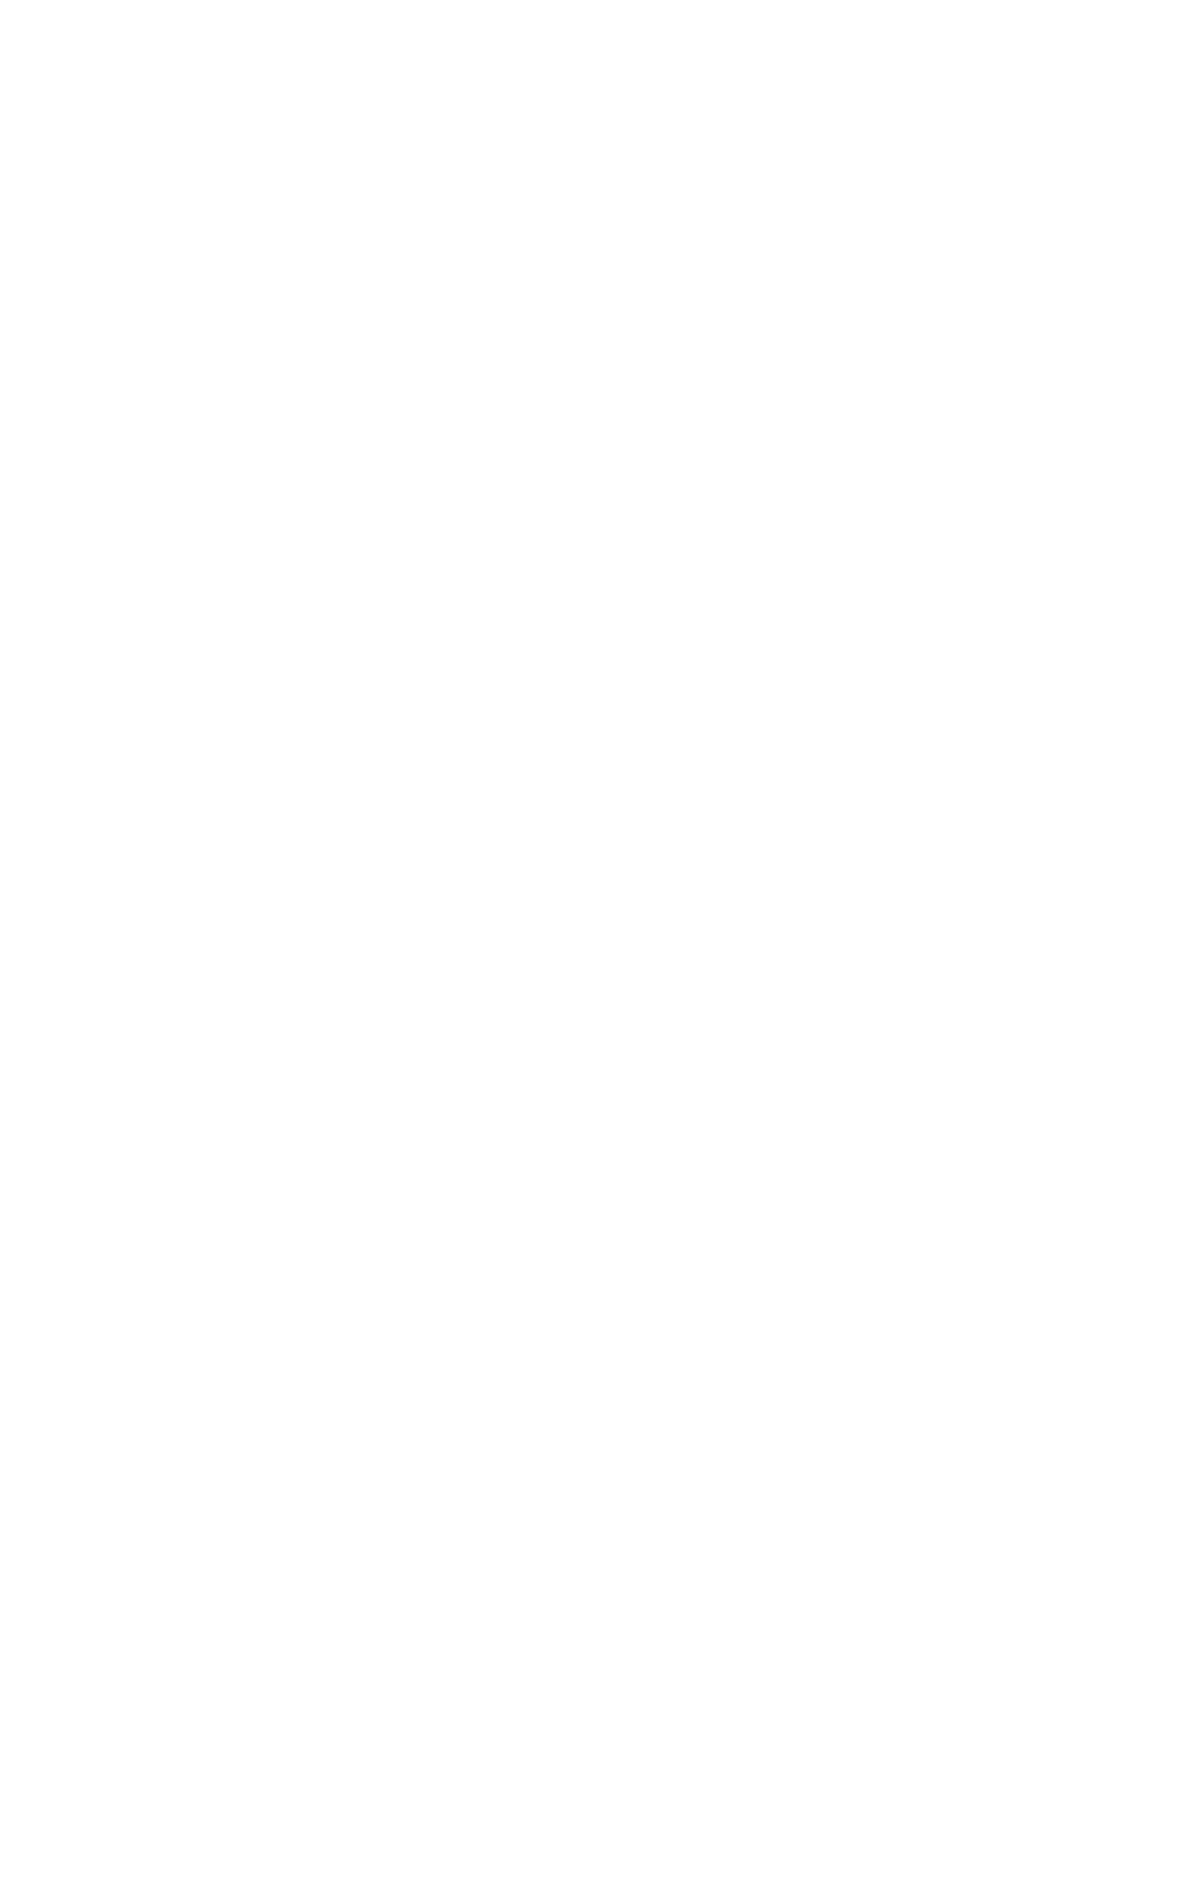 Provides  comprehensive  reports